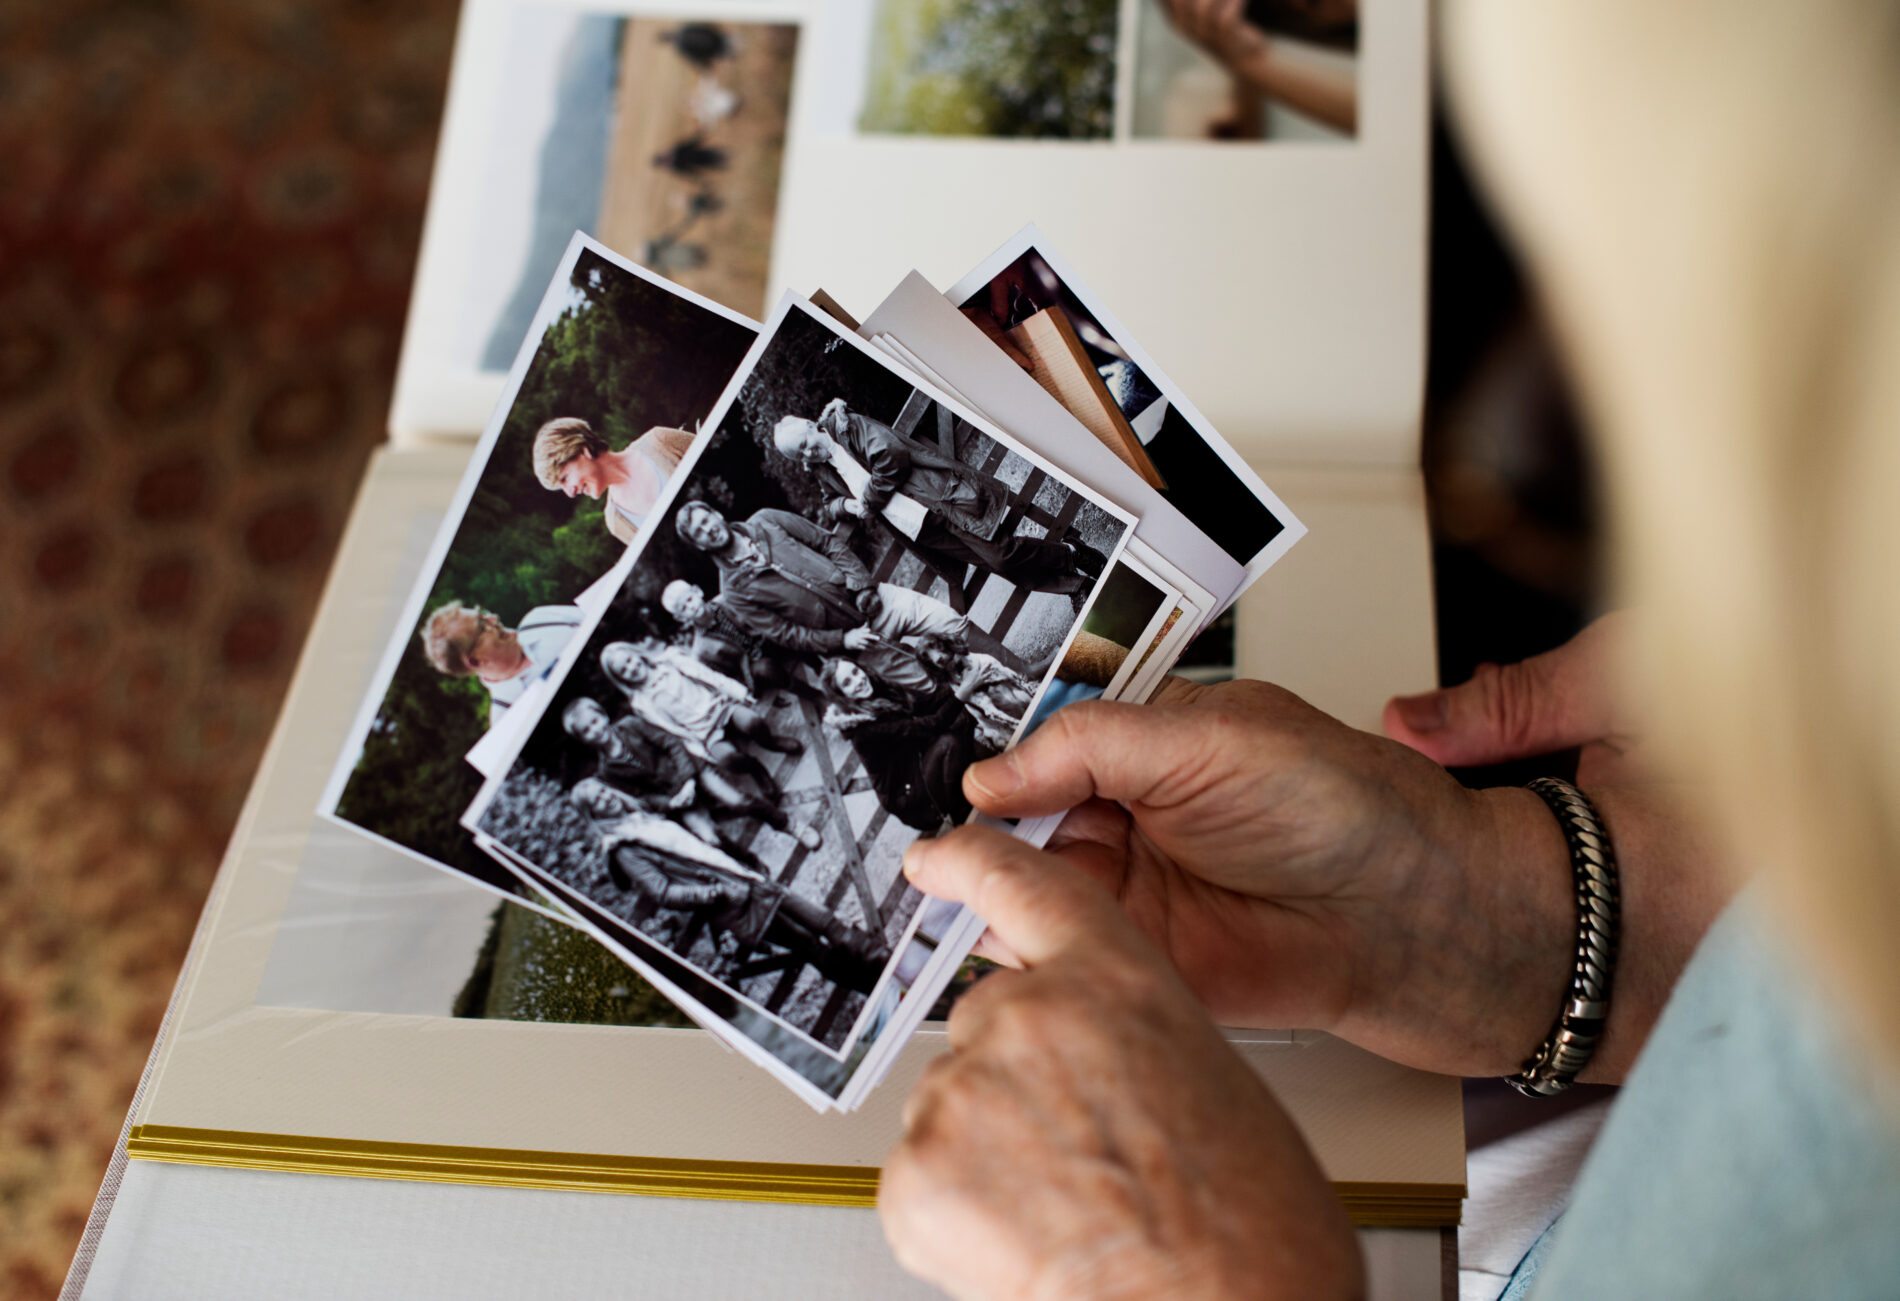 A woman cherishing old memories while flipping through a photo album.